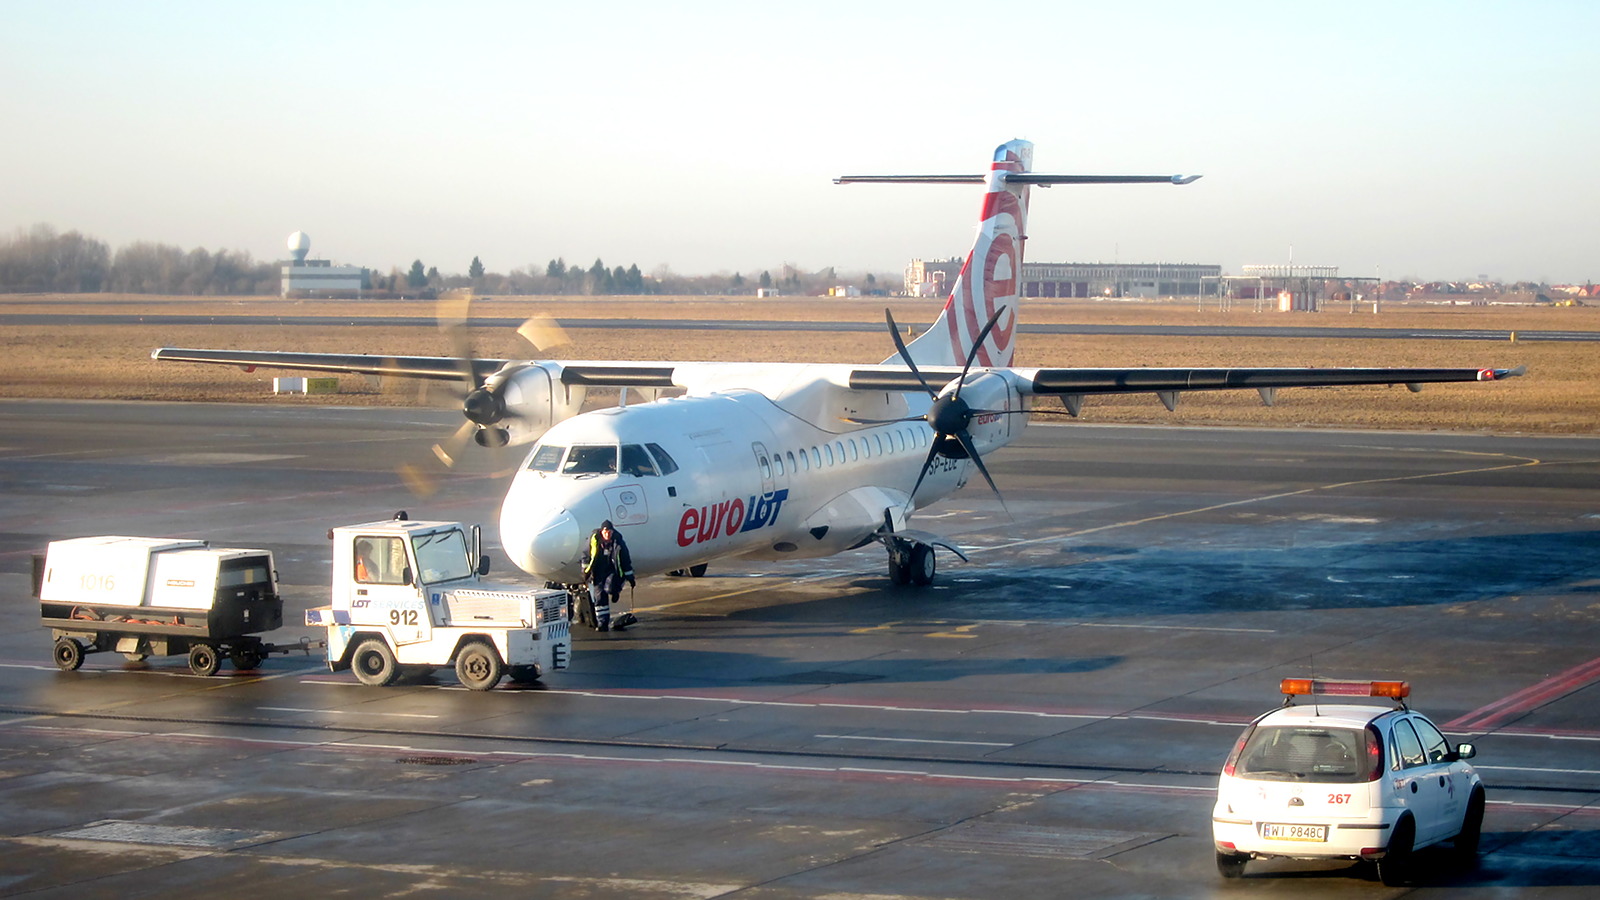 SP-EDE ✈ Eurolot ATR 42-500 @ Warsaw-Chopin